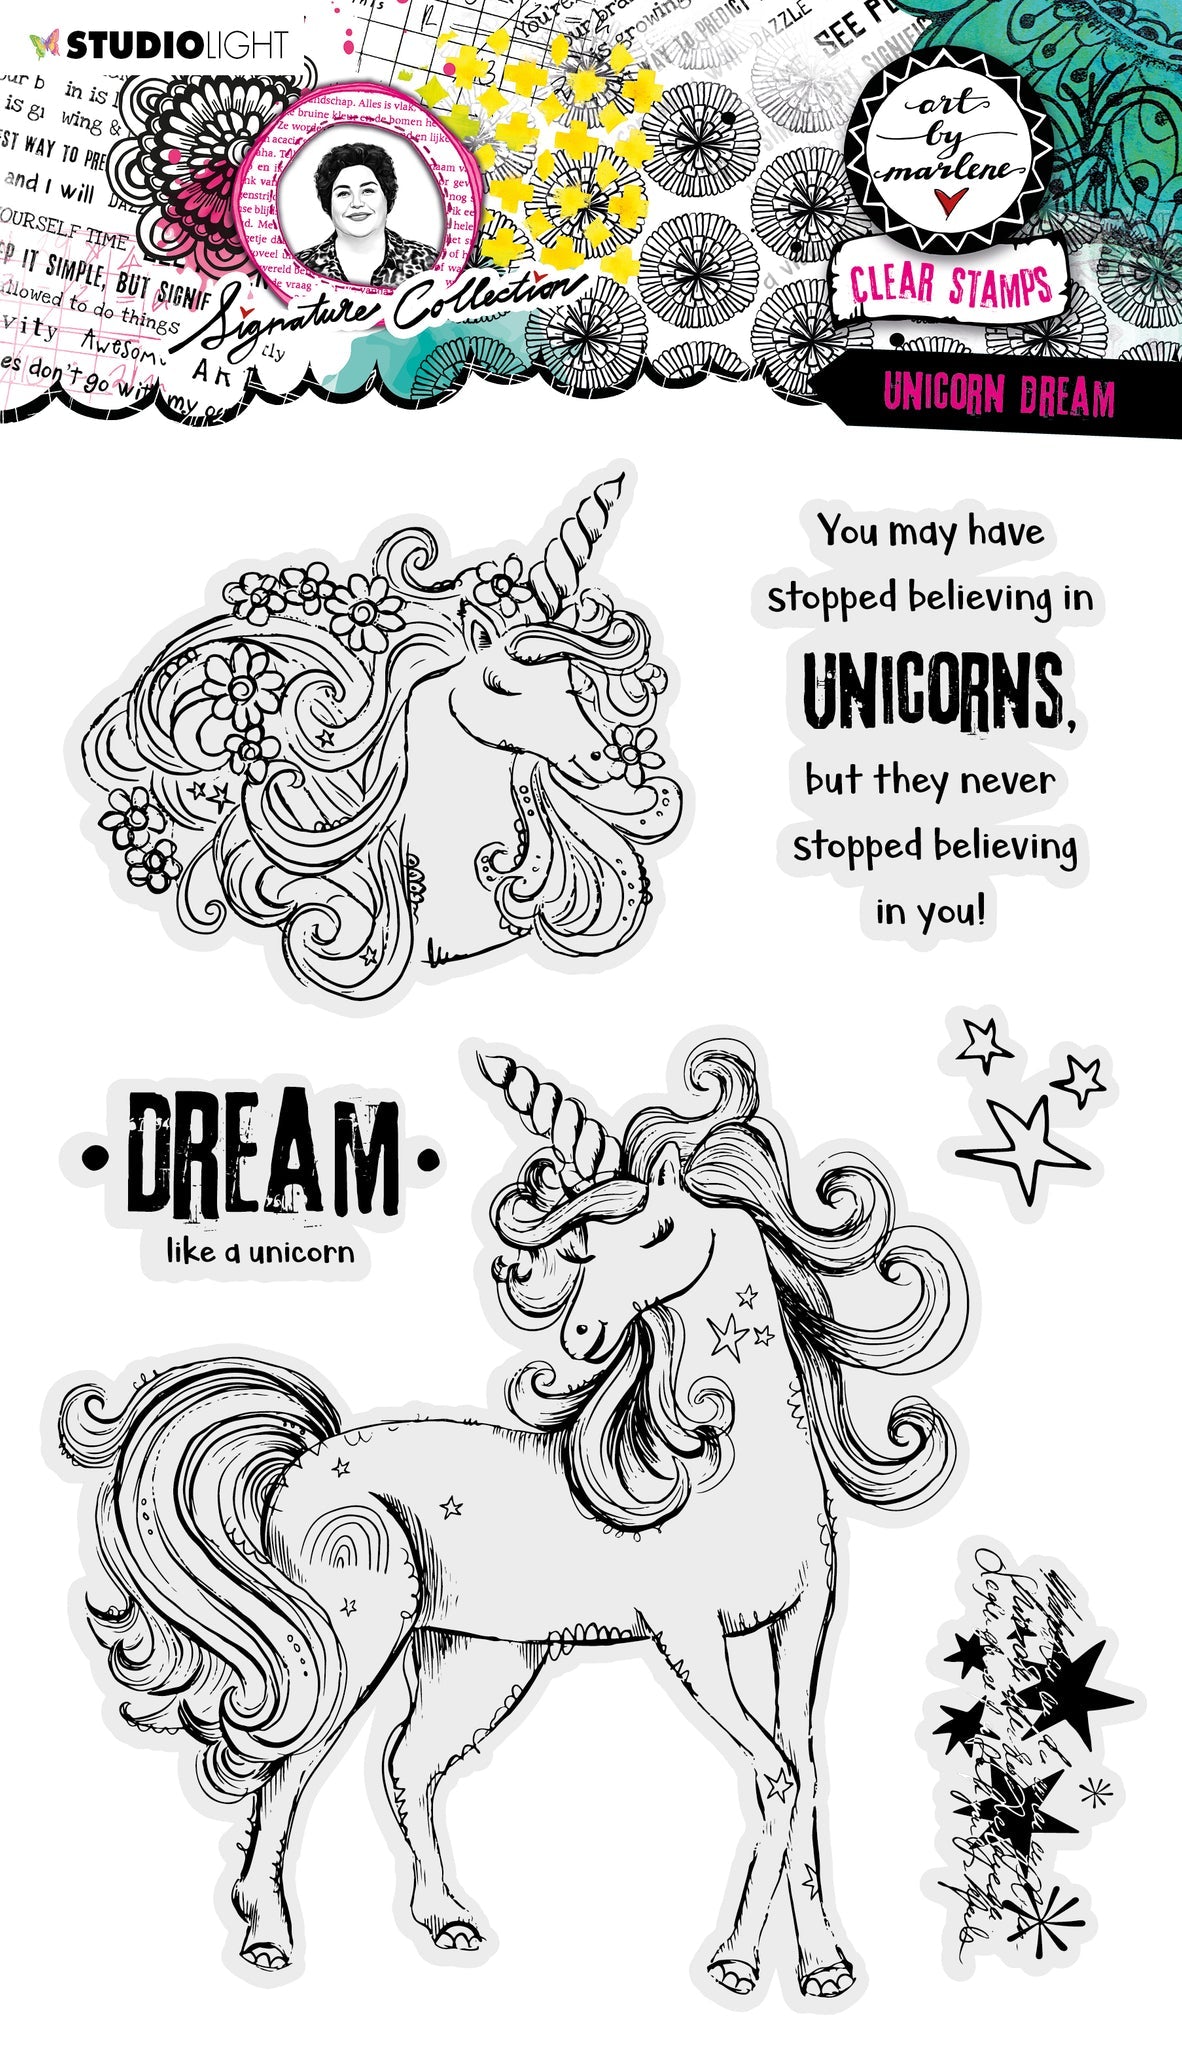 Art by Marlene Clear Stamp - Unicorn Dream